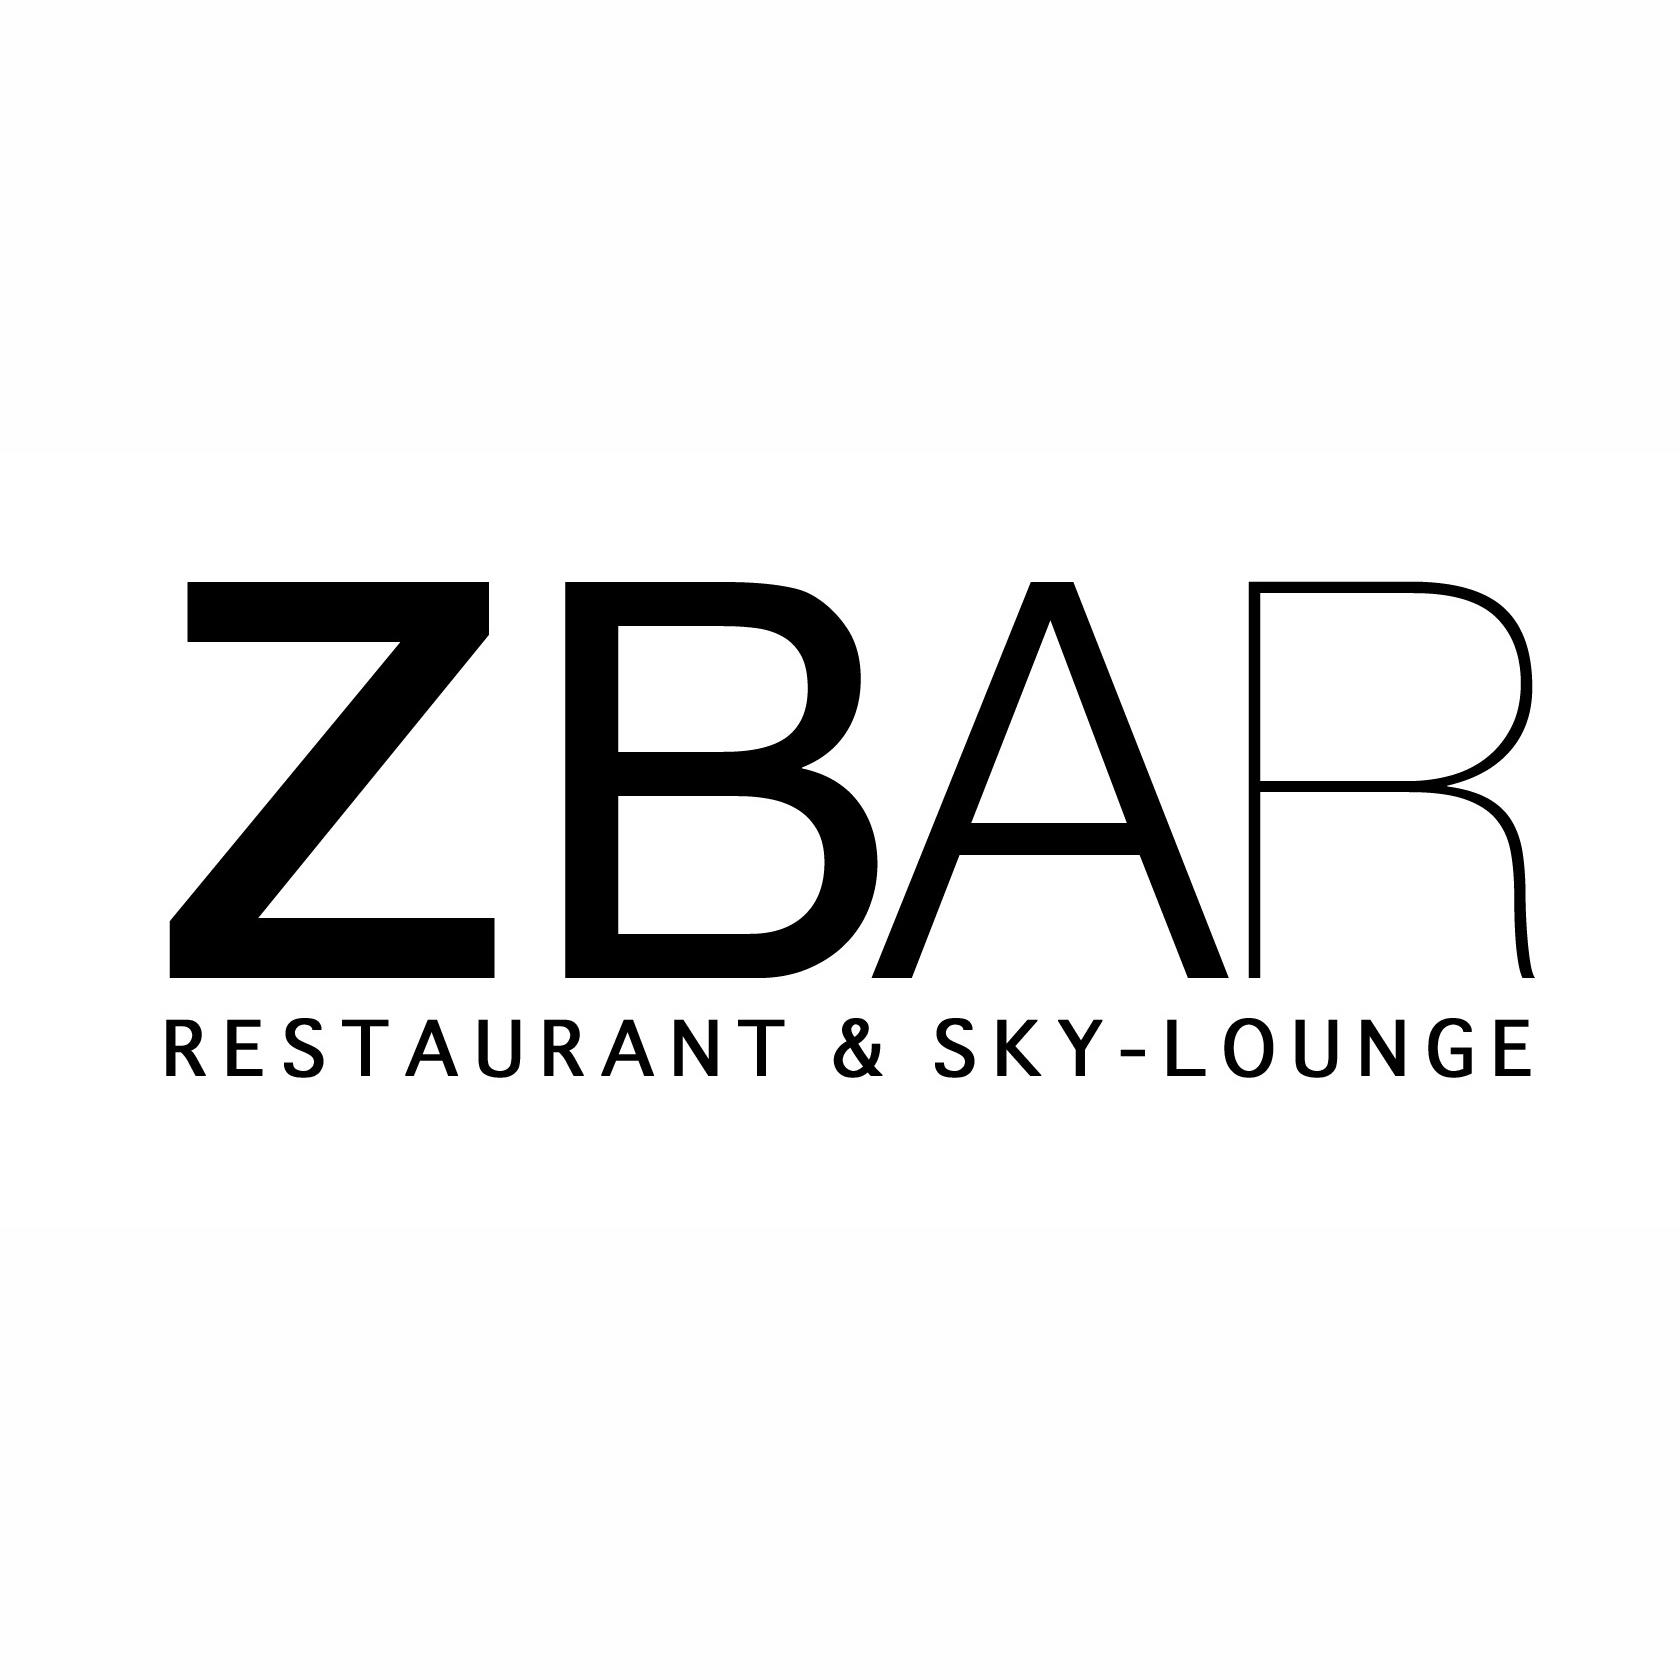 Z BAR Restaurant & Sky-Lounge 